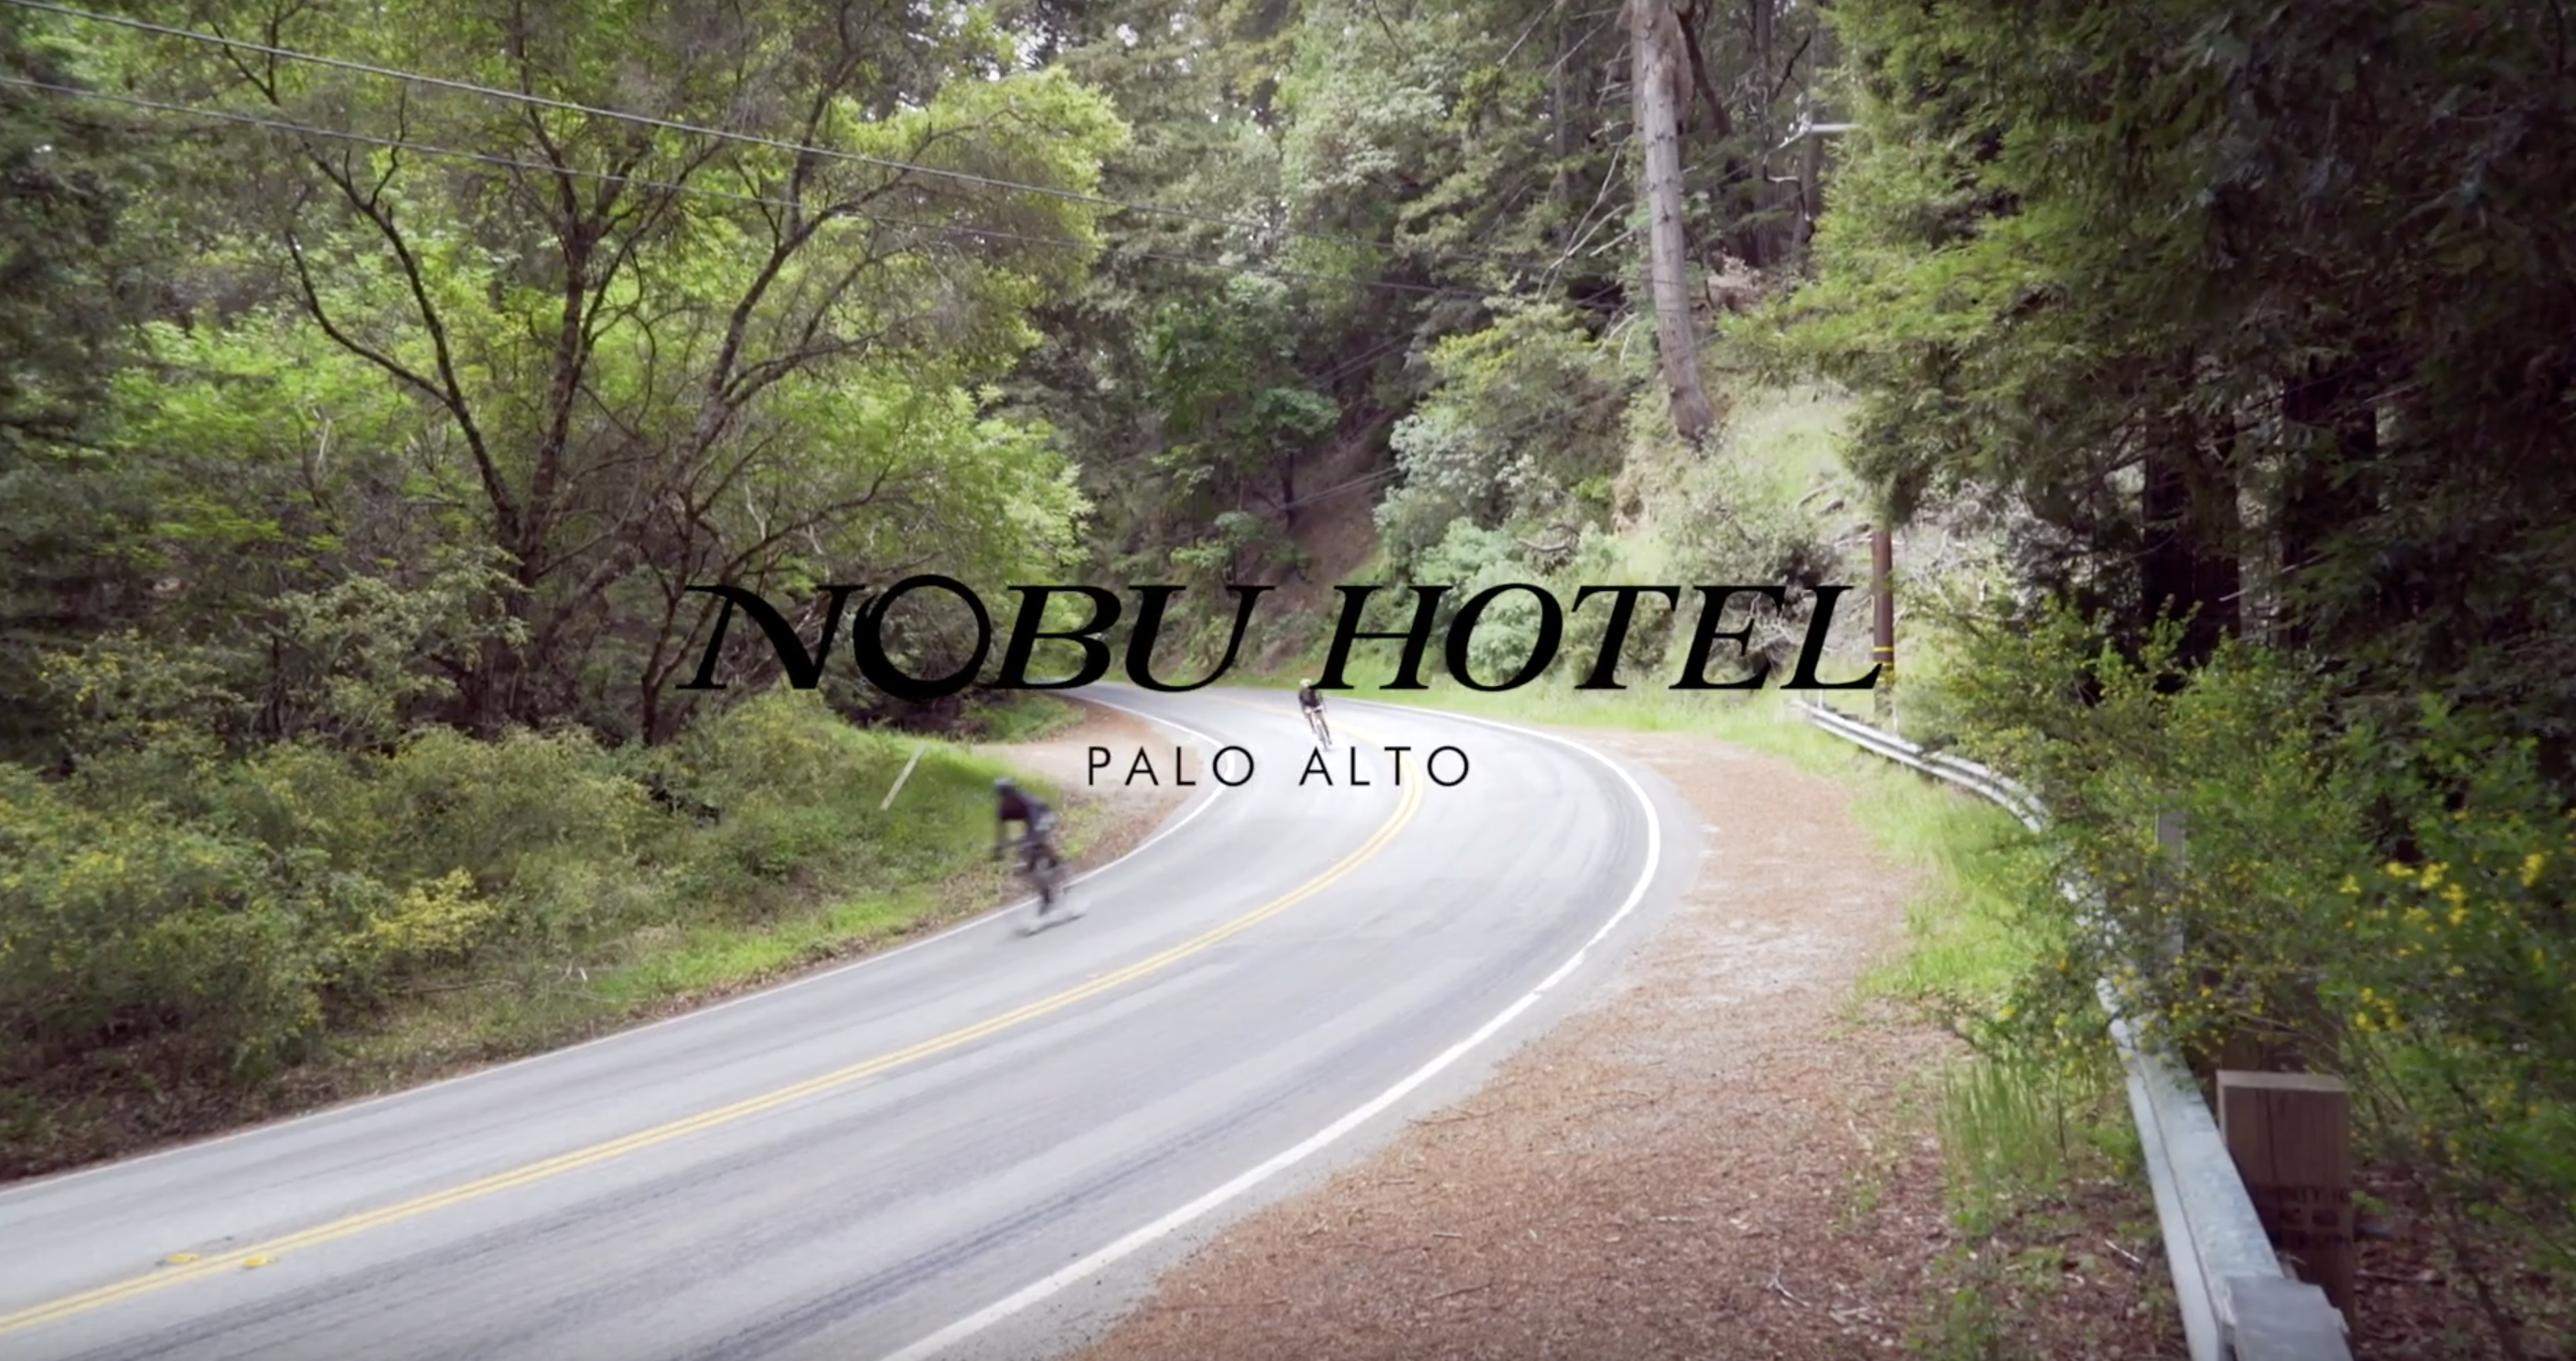 Nobu Hotel Palo Alto logo over cyclist on road